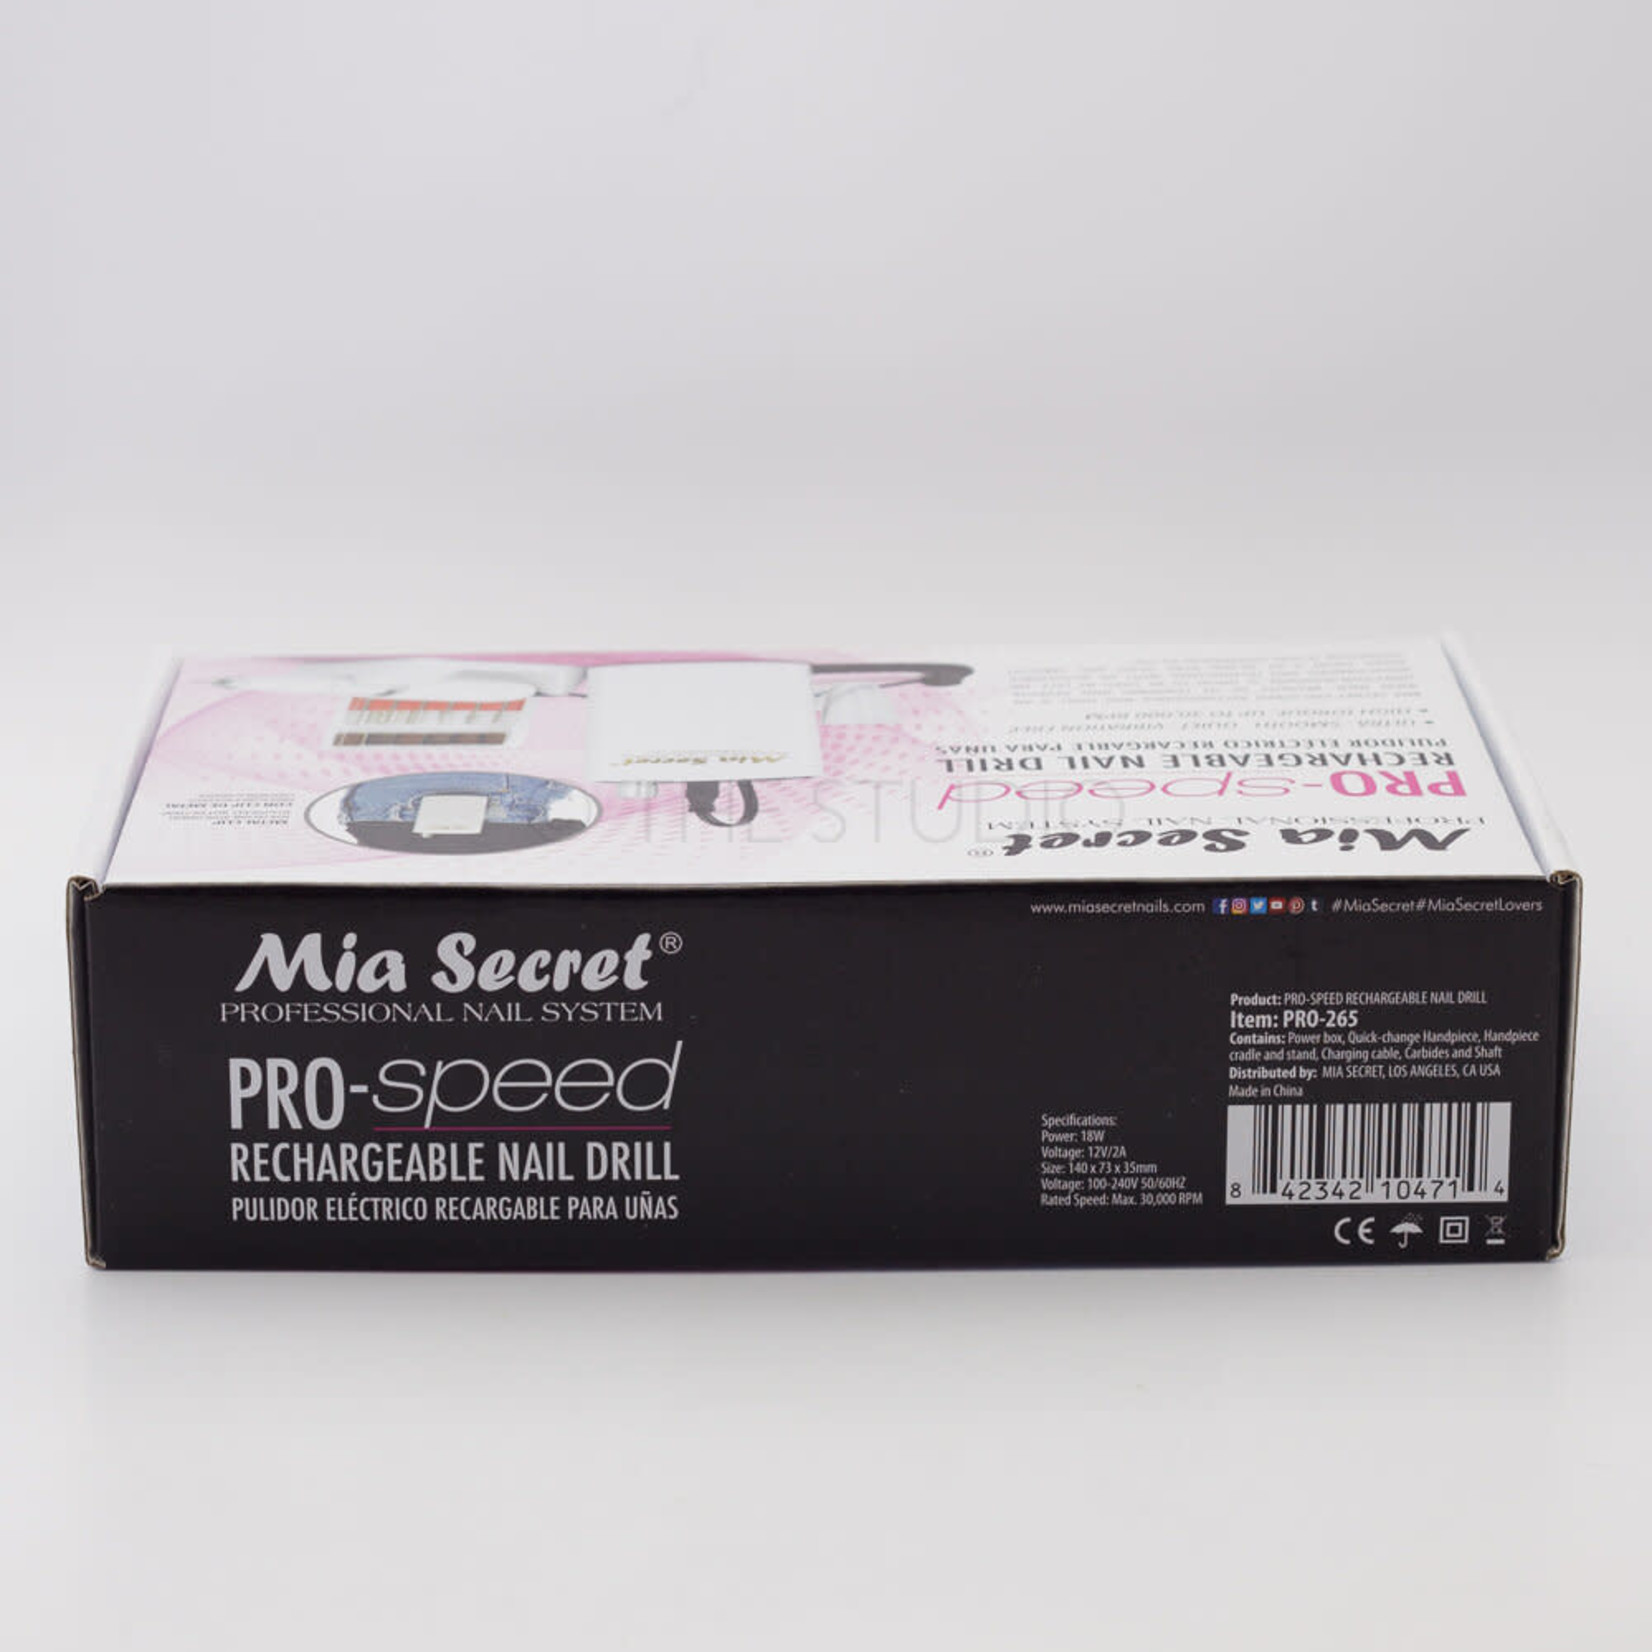 Mia Secret Mia Secret - Pro-Speed Rechargeable Nail E-File Drill with Metal Clip - White